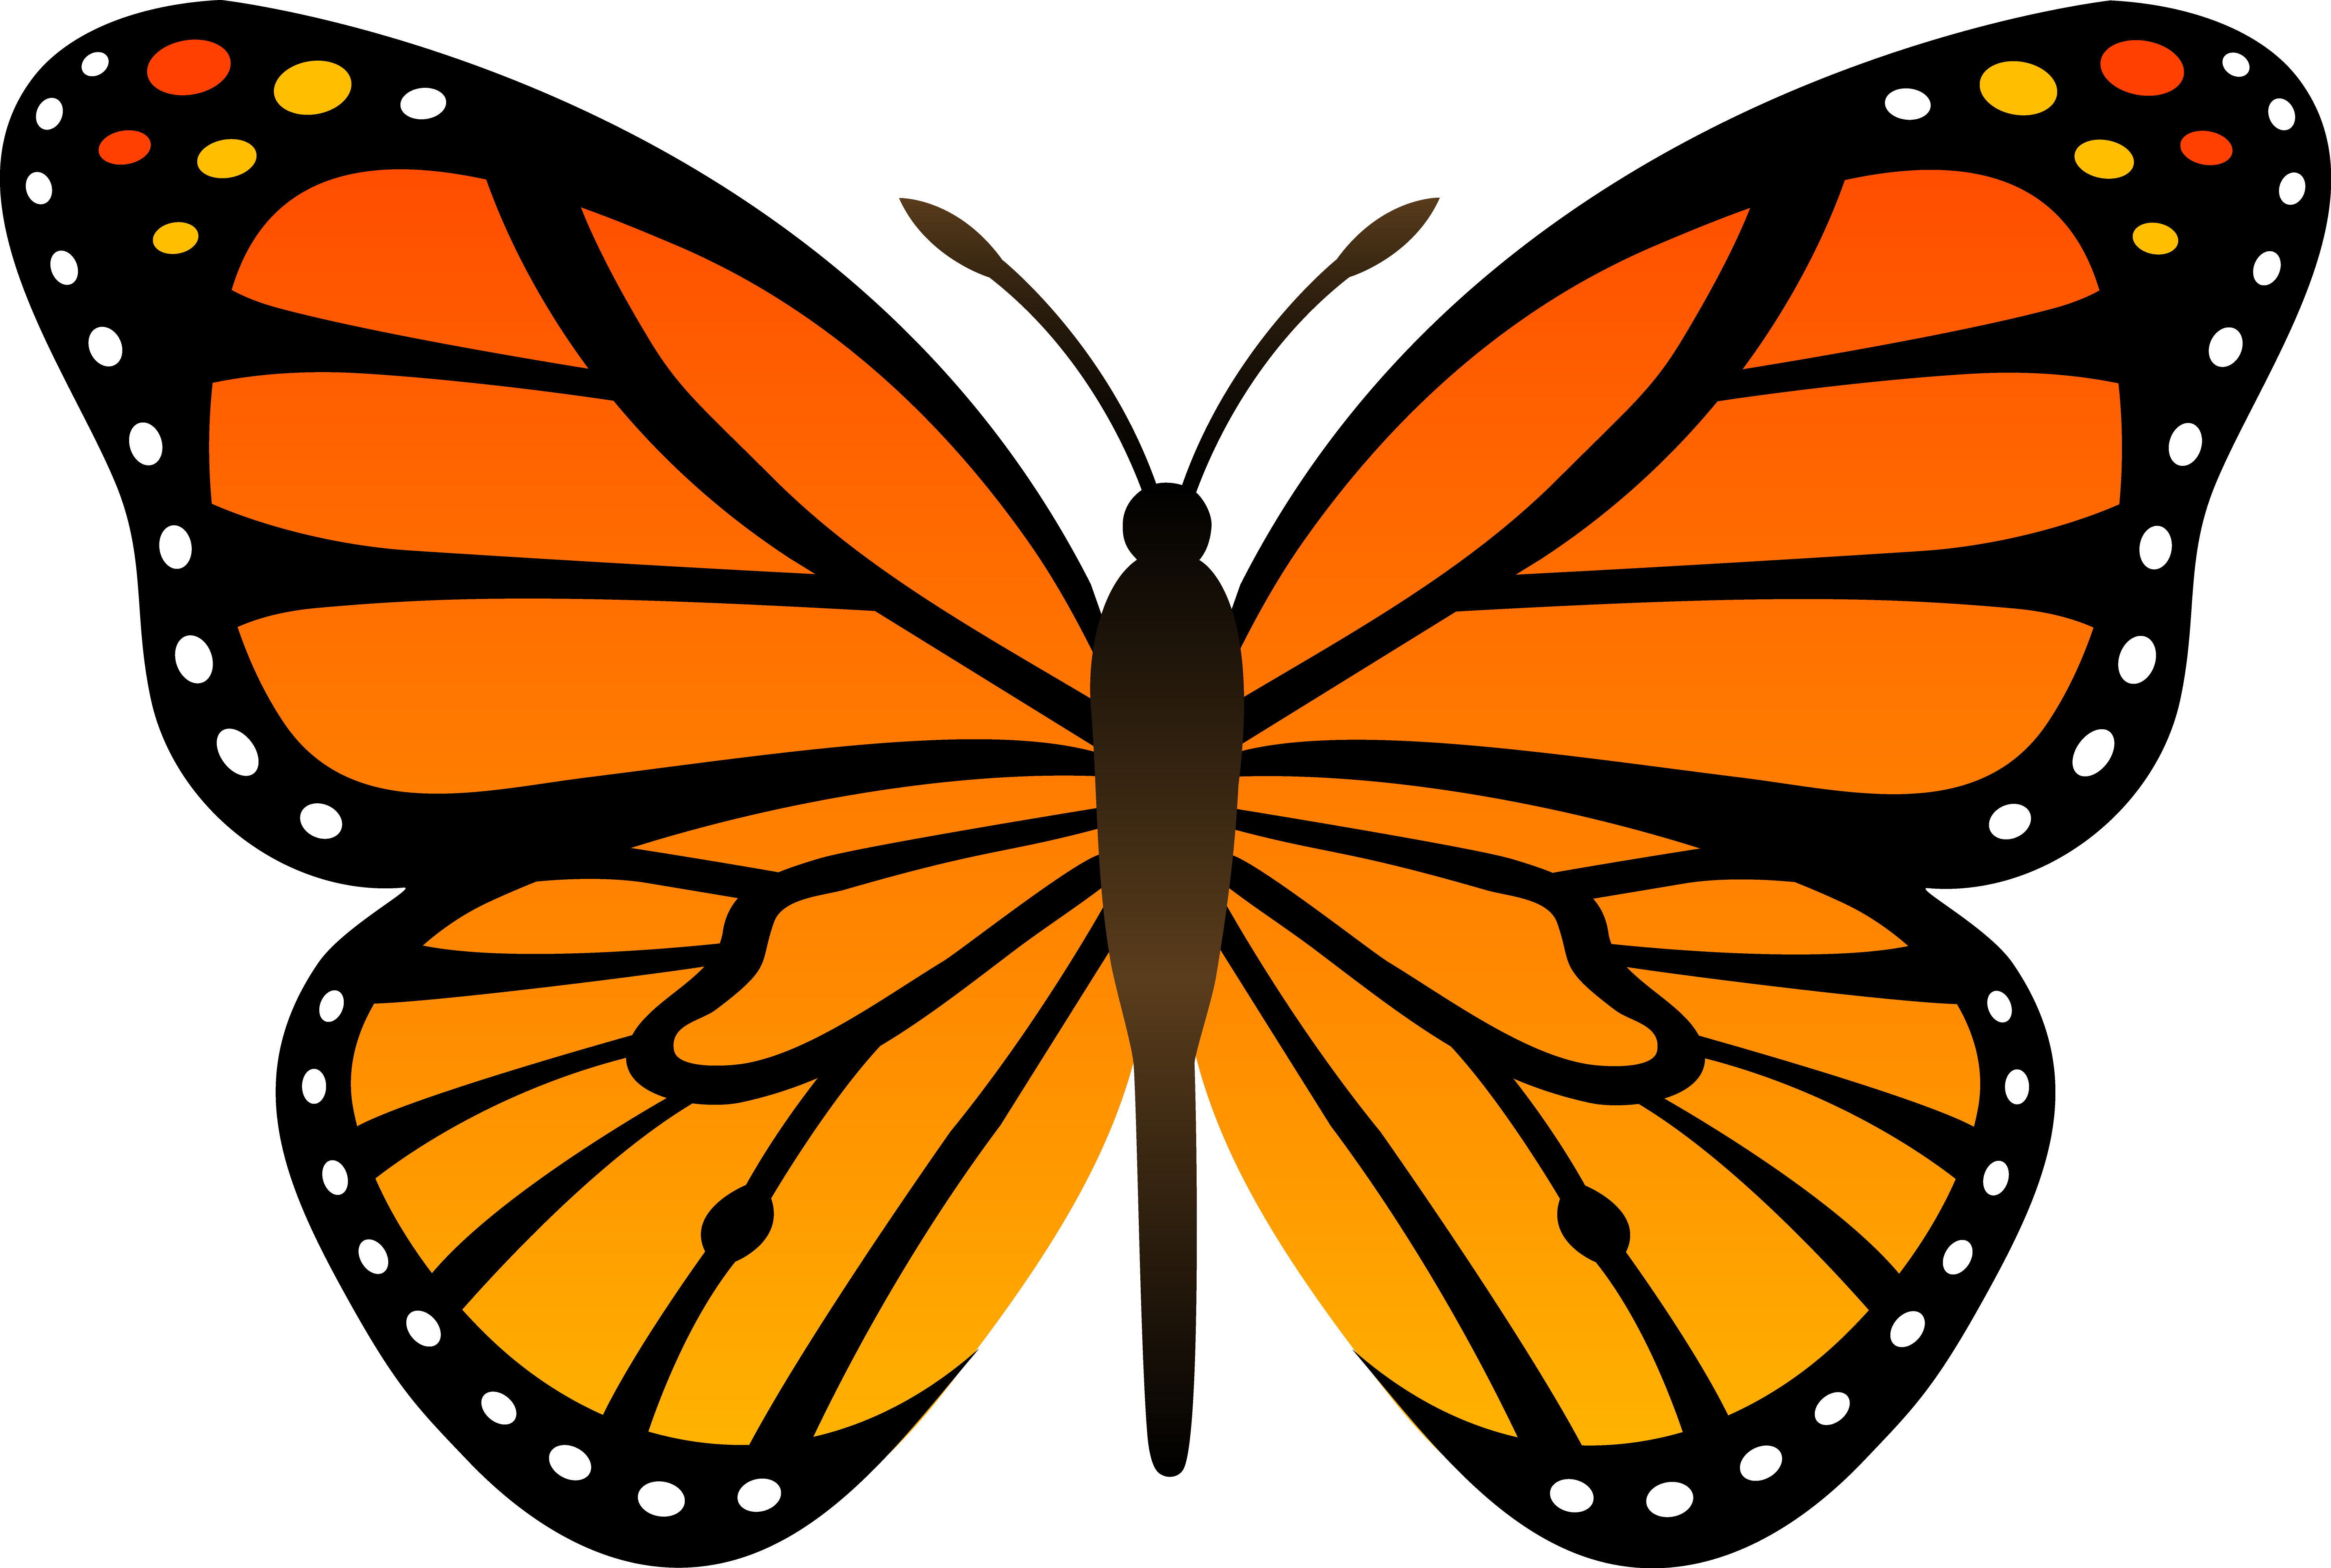 Monarch butterfly clipart bla